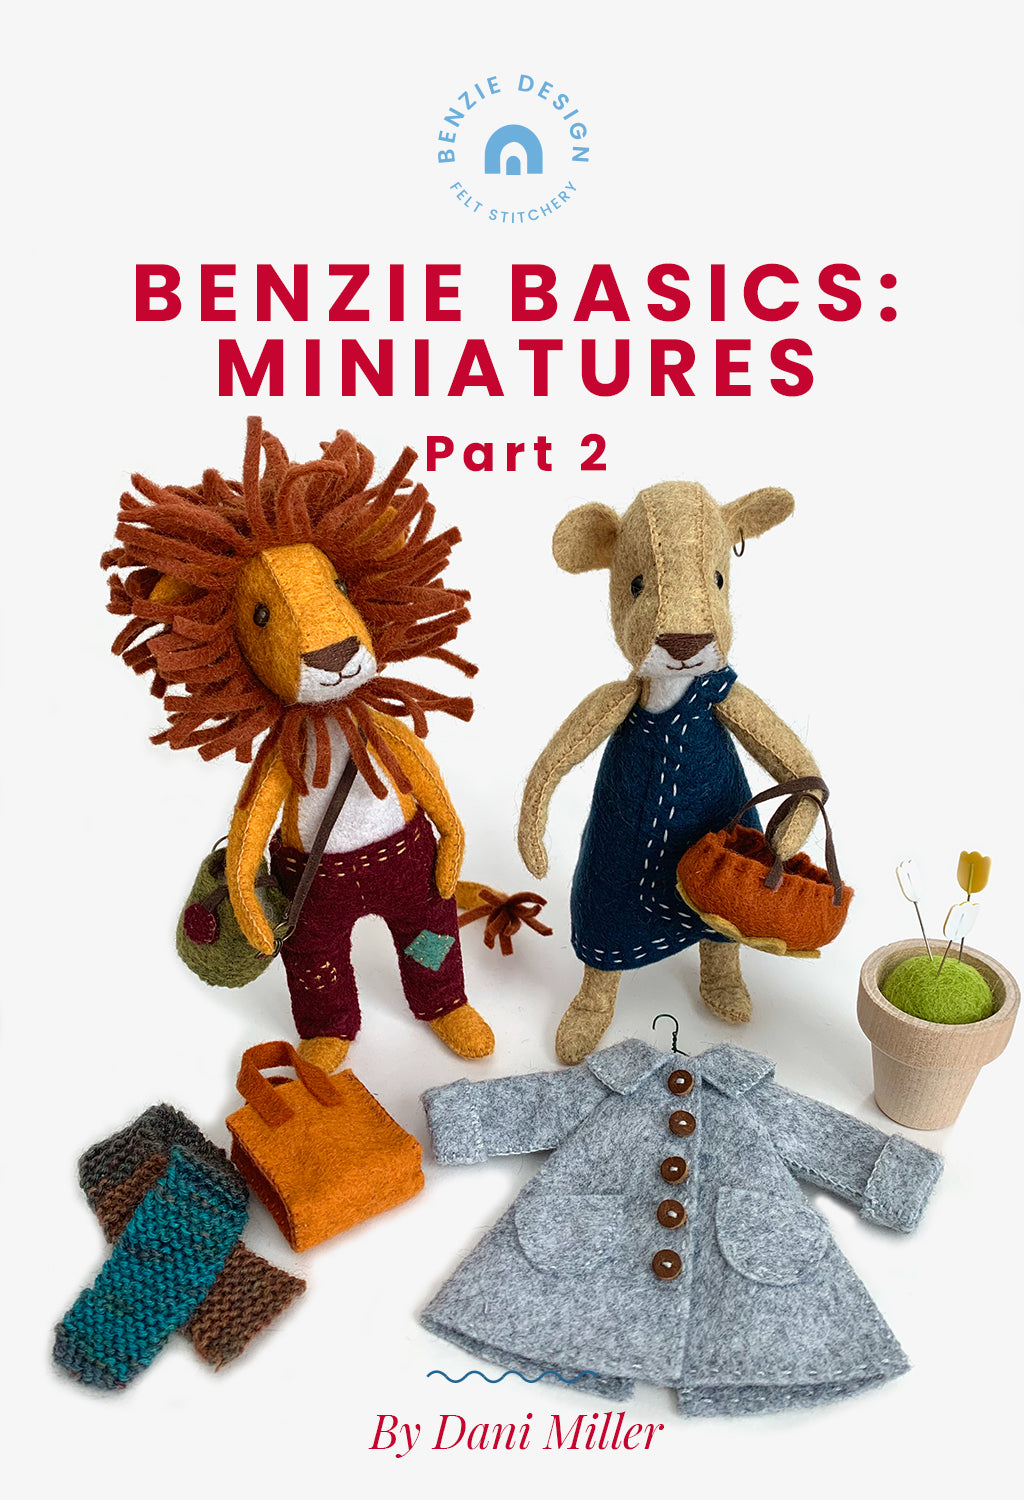 Benzie Basics: Miniatures Part 2